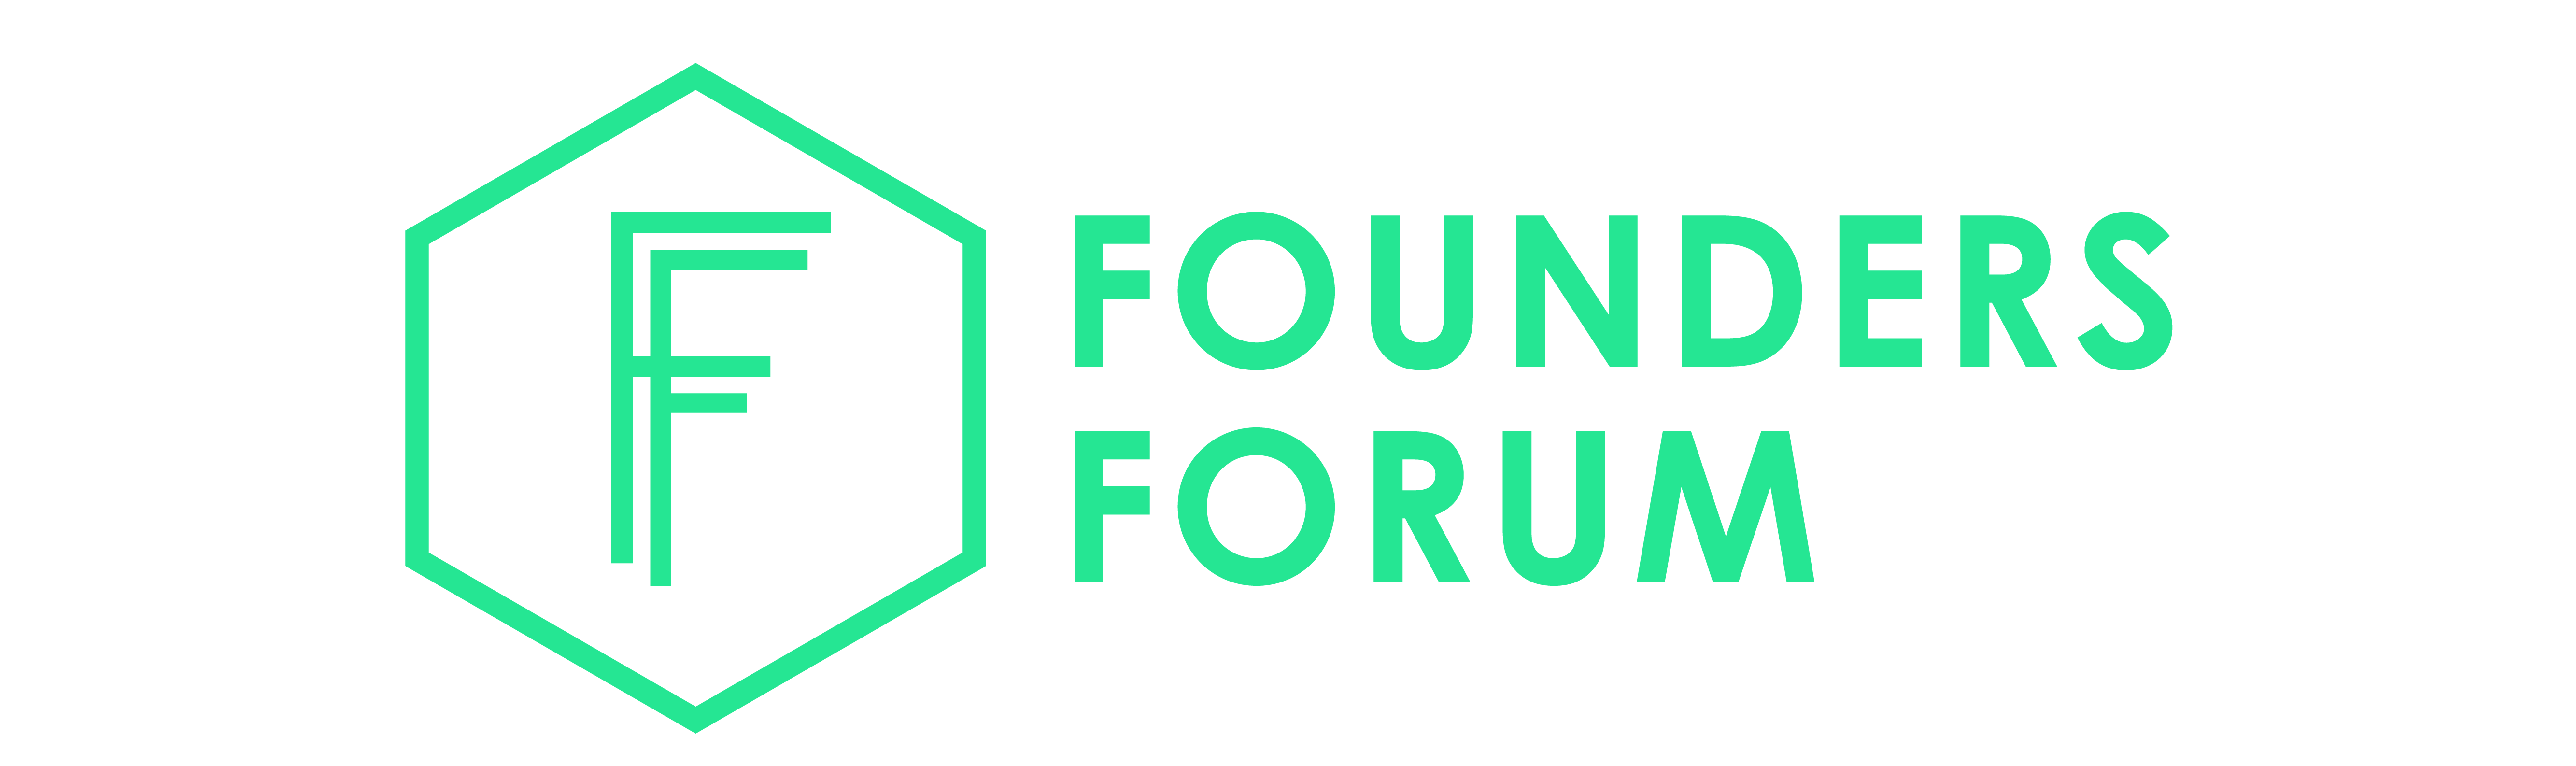 Founders Forum logo